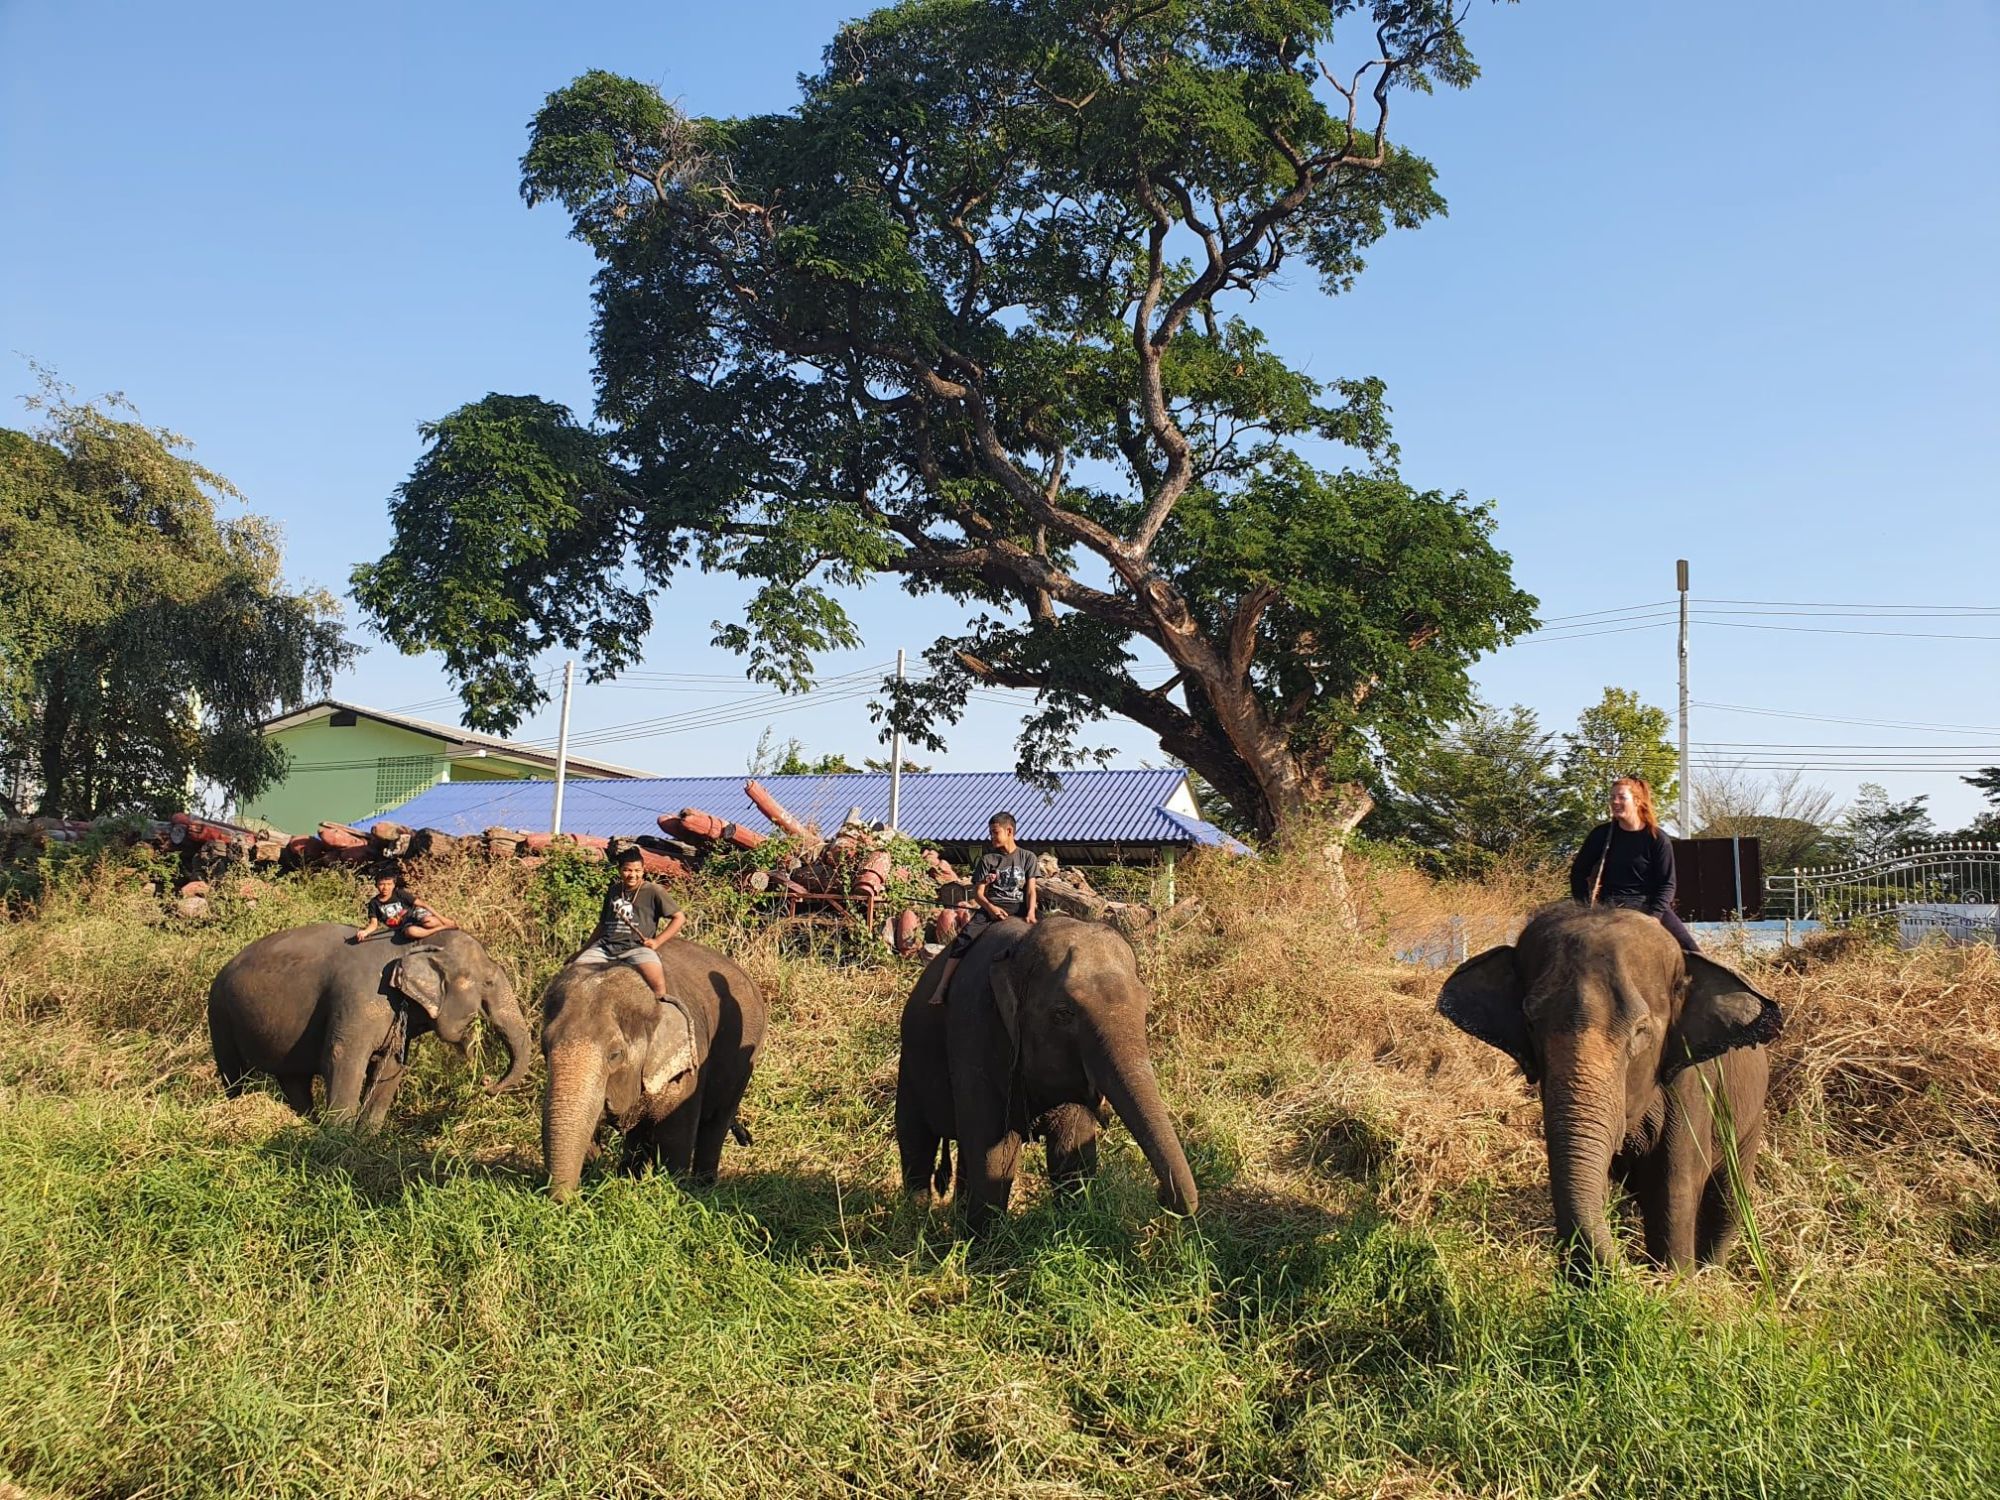 Grazing elephants 1